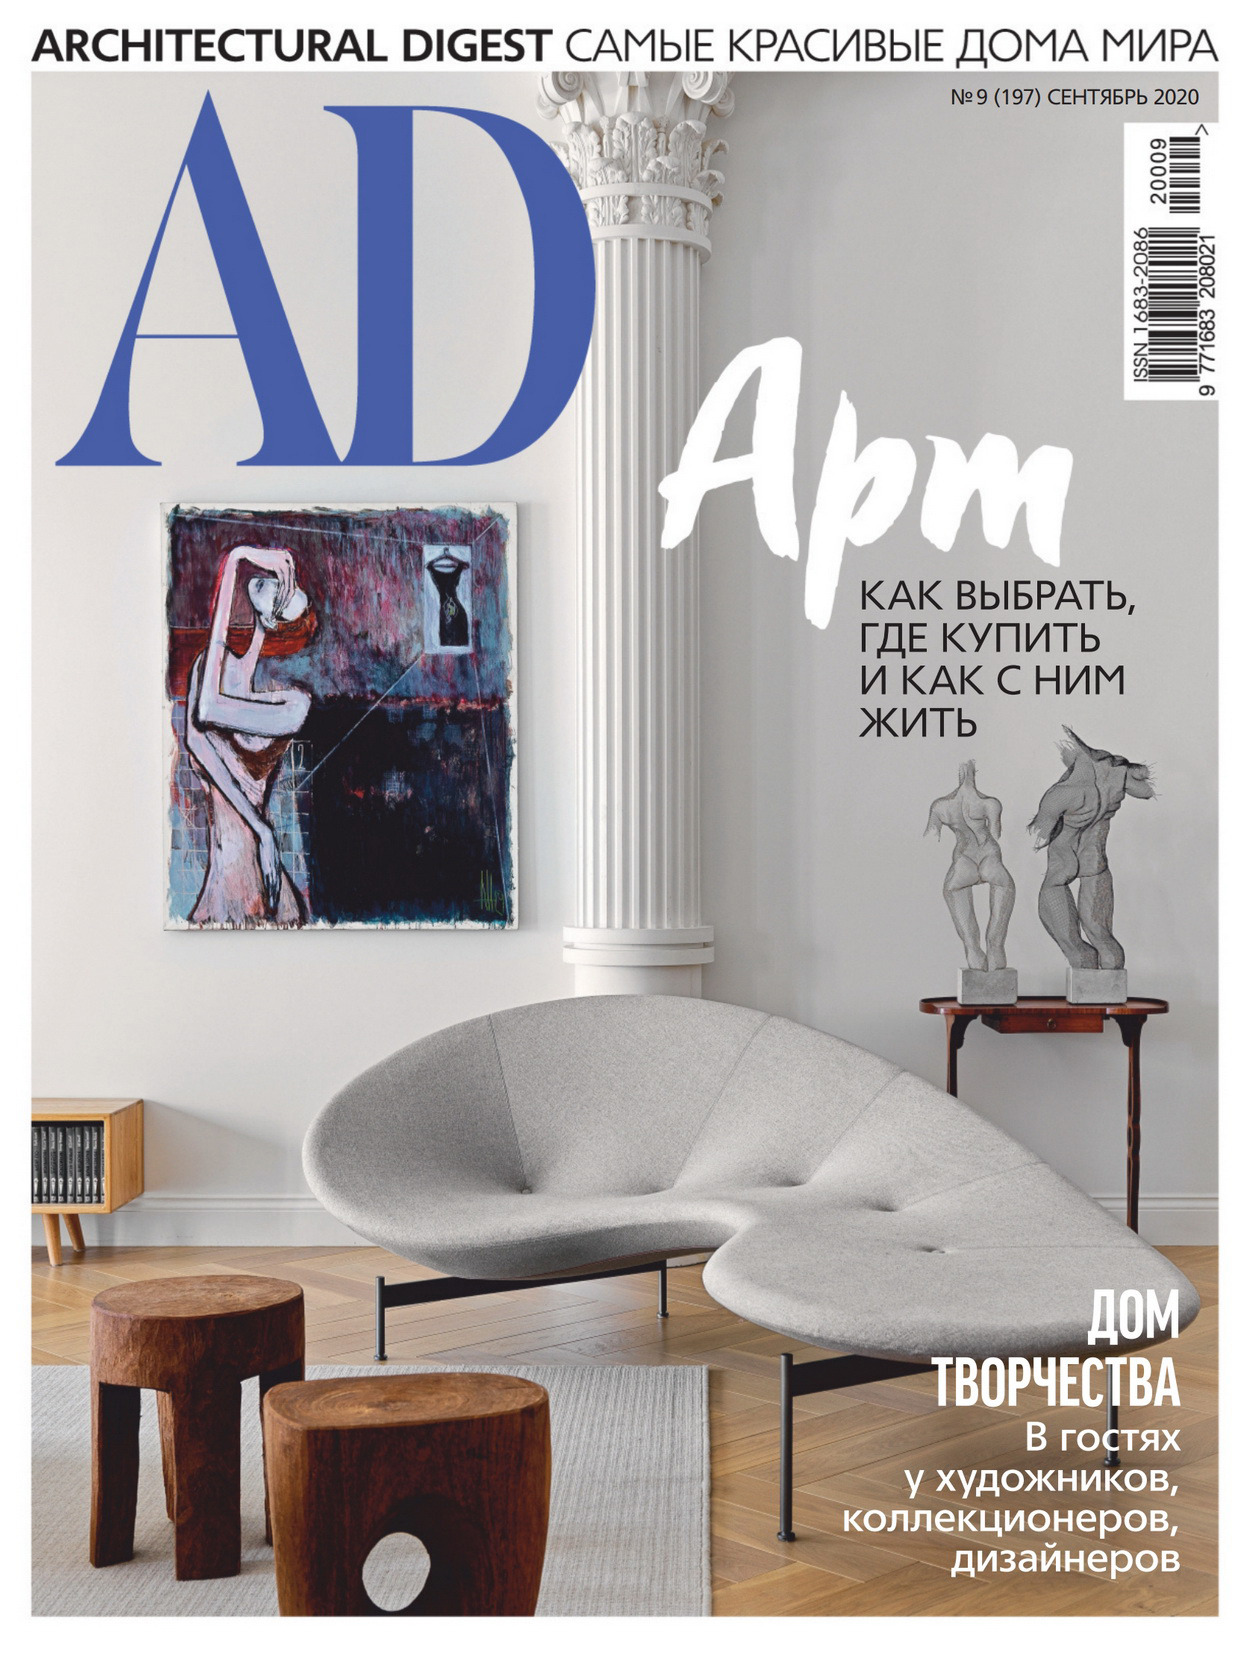 《AD》俄罗斯版室内室外设计杂志2020年09月号